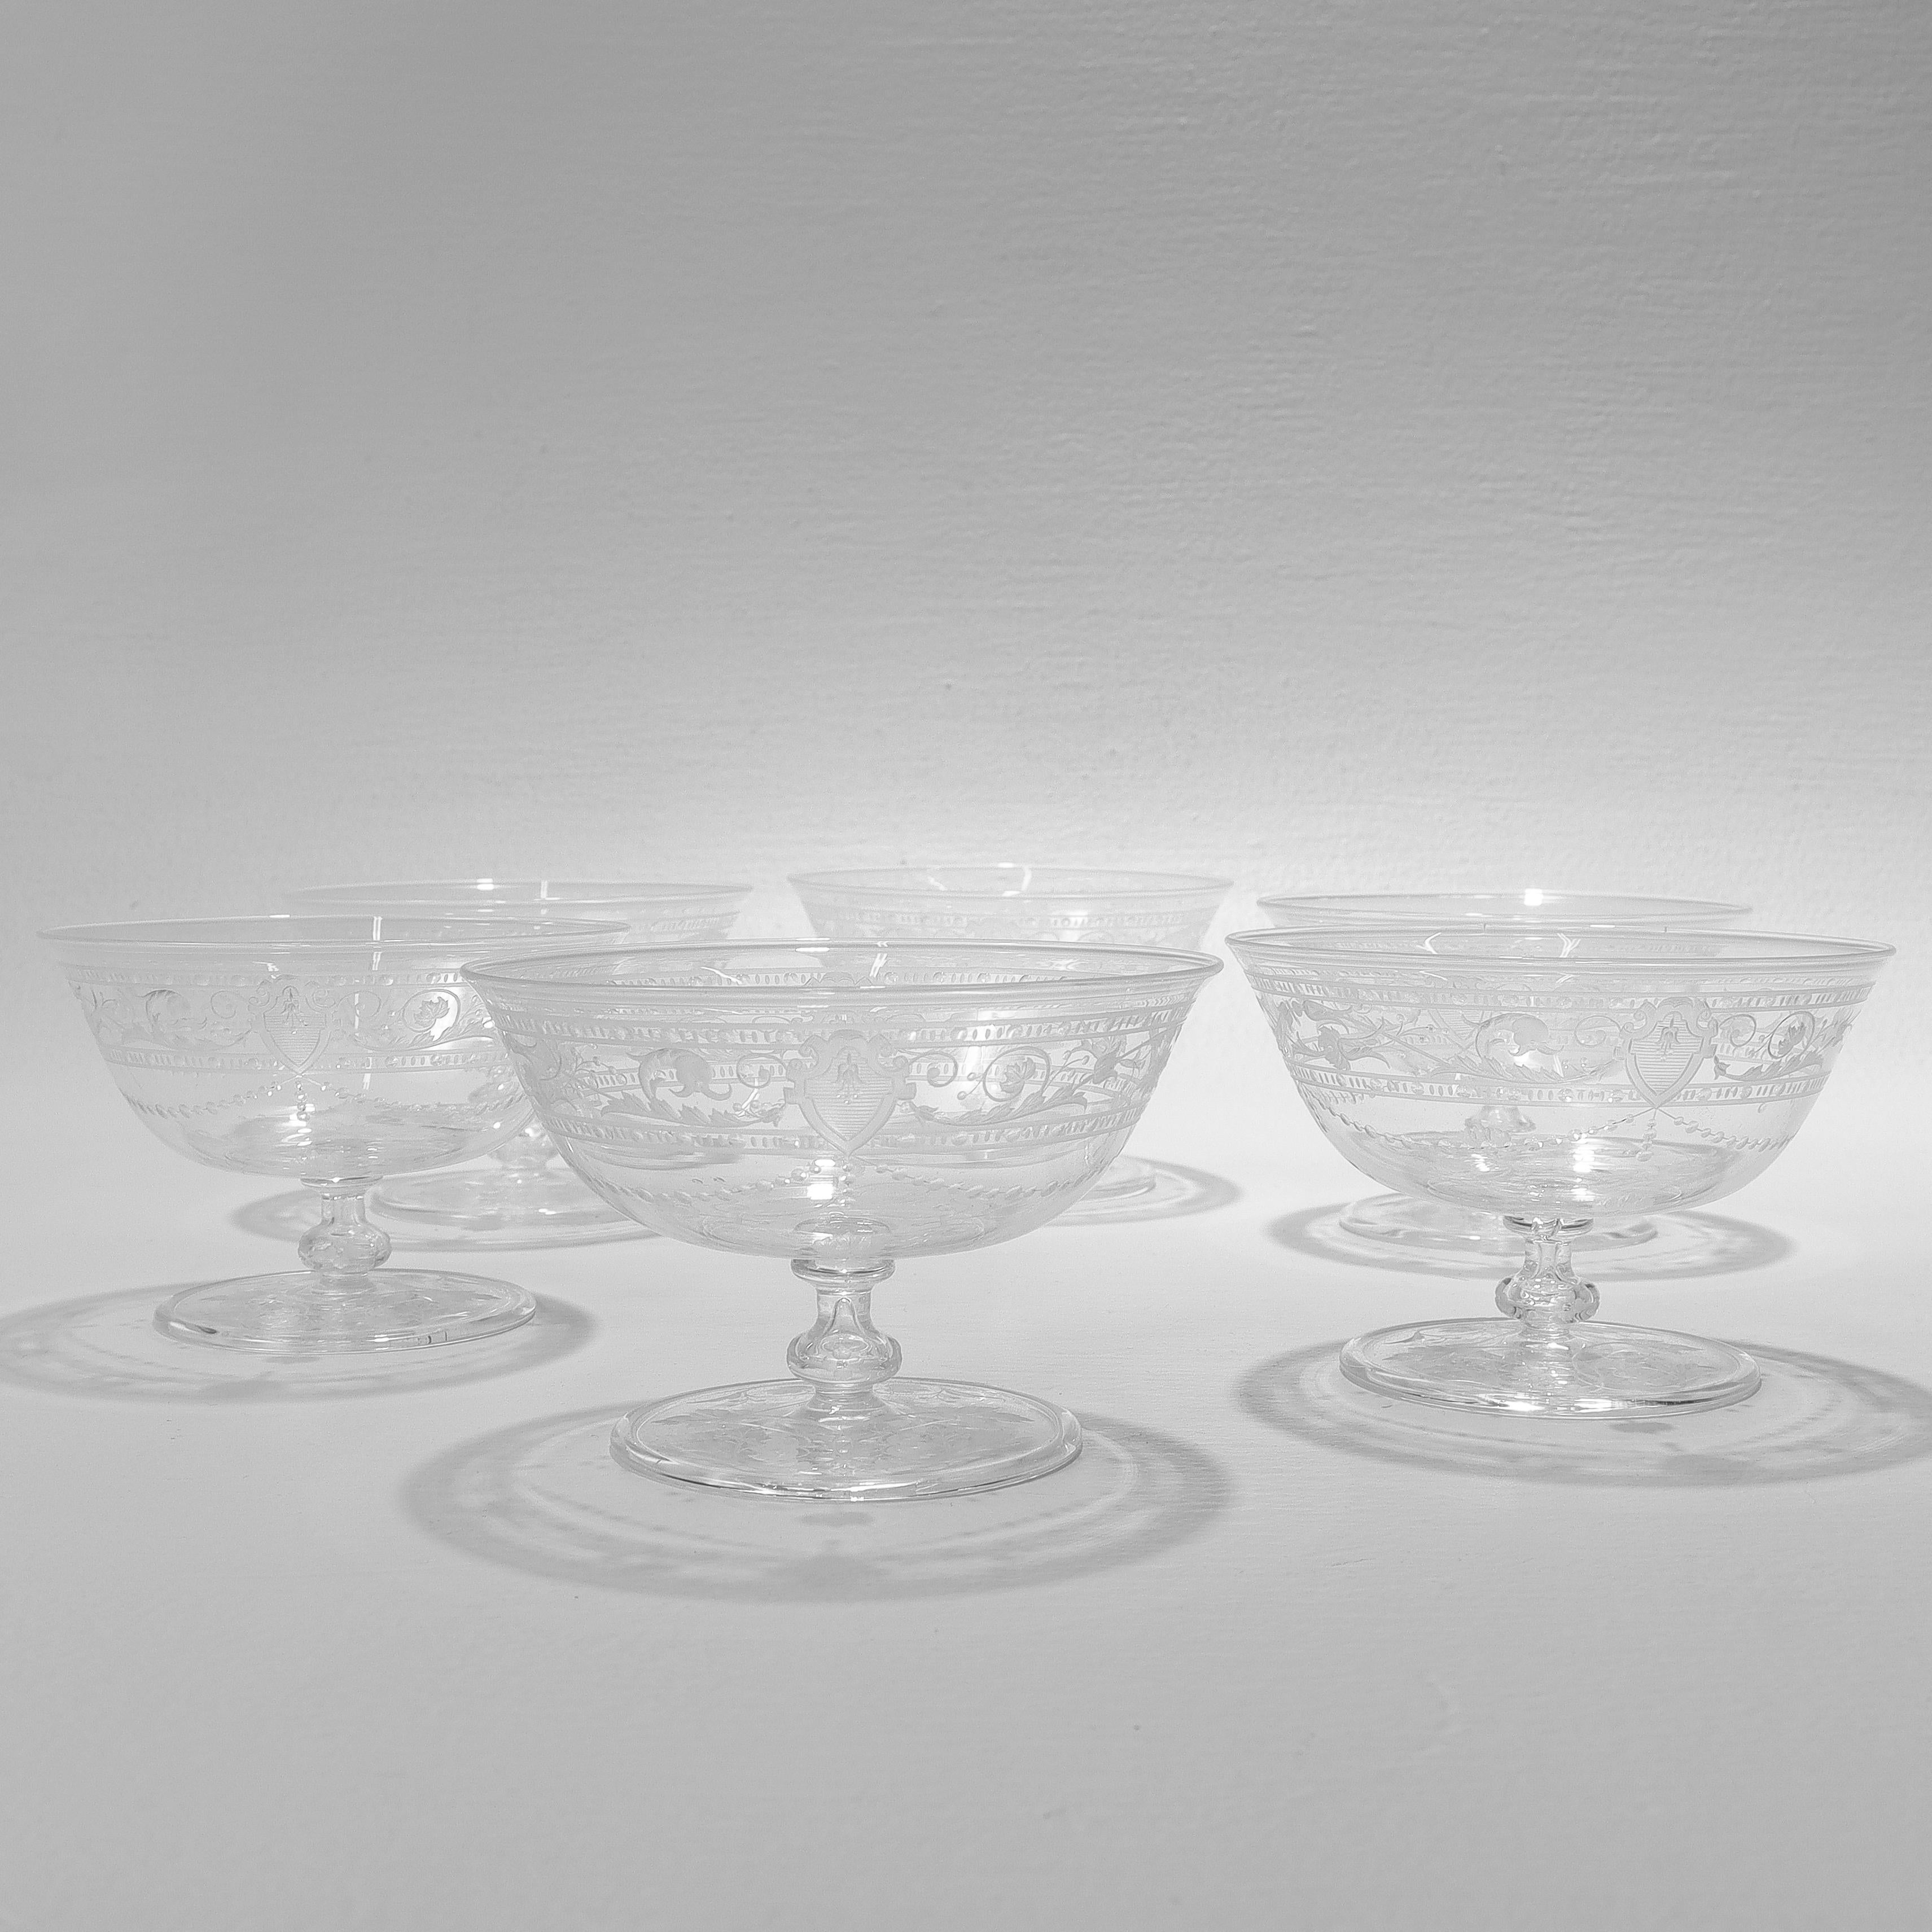 20th Century Set of 6 Antique Stourbridge Etched & Engraved Glass Sherbert Bowls For Sale